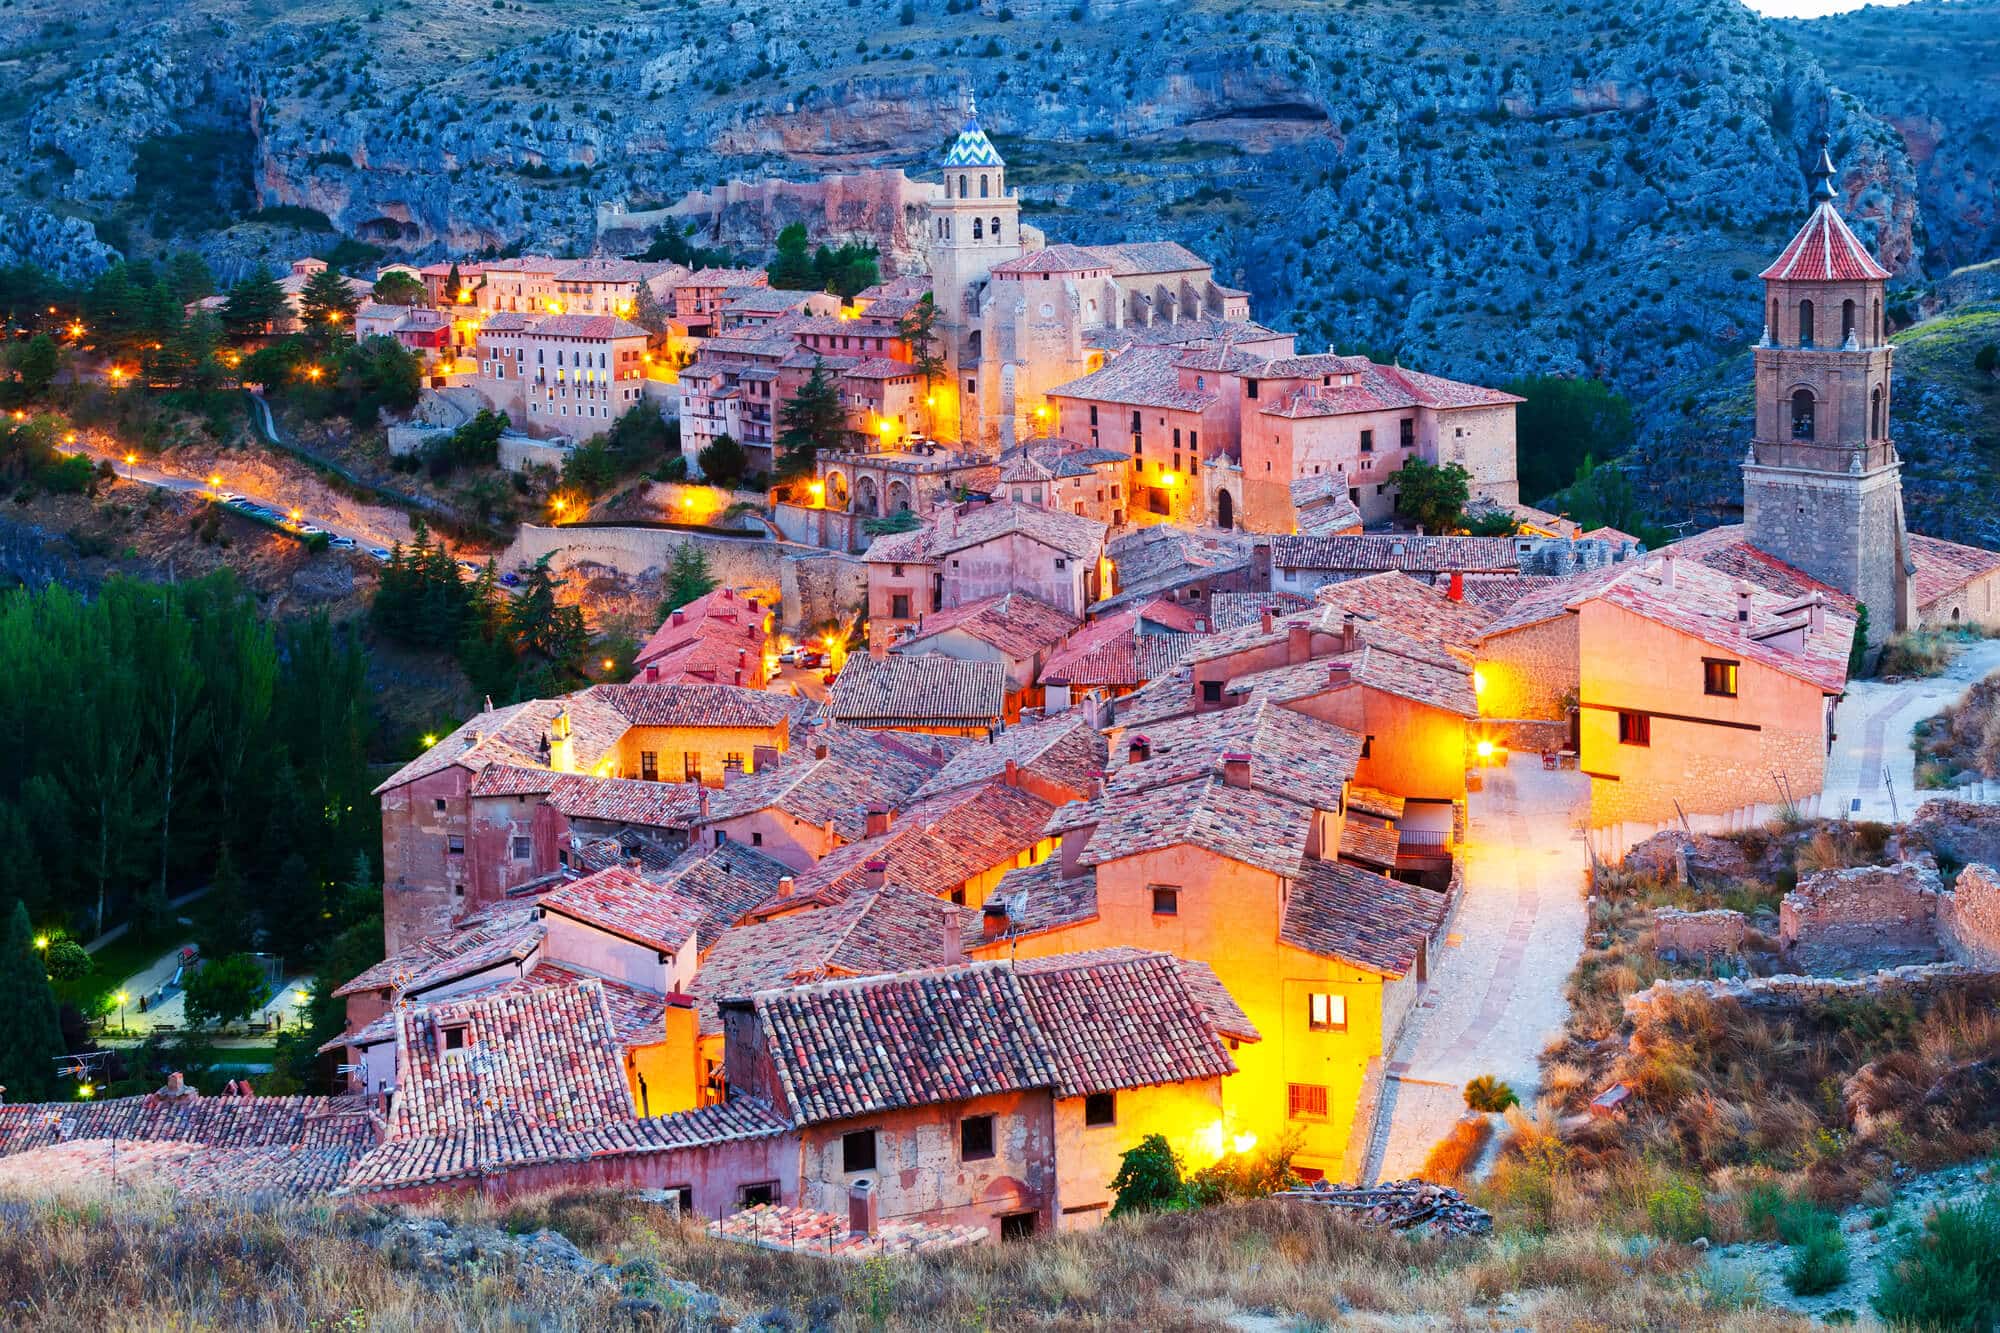 Albarracín - One of Spain's most beautiful hidden gems